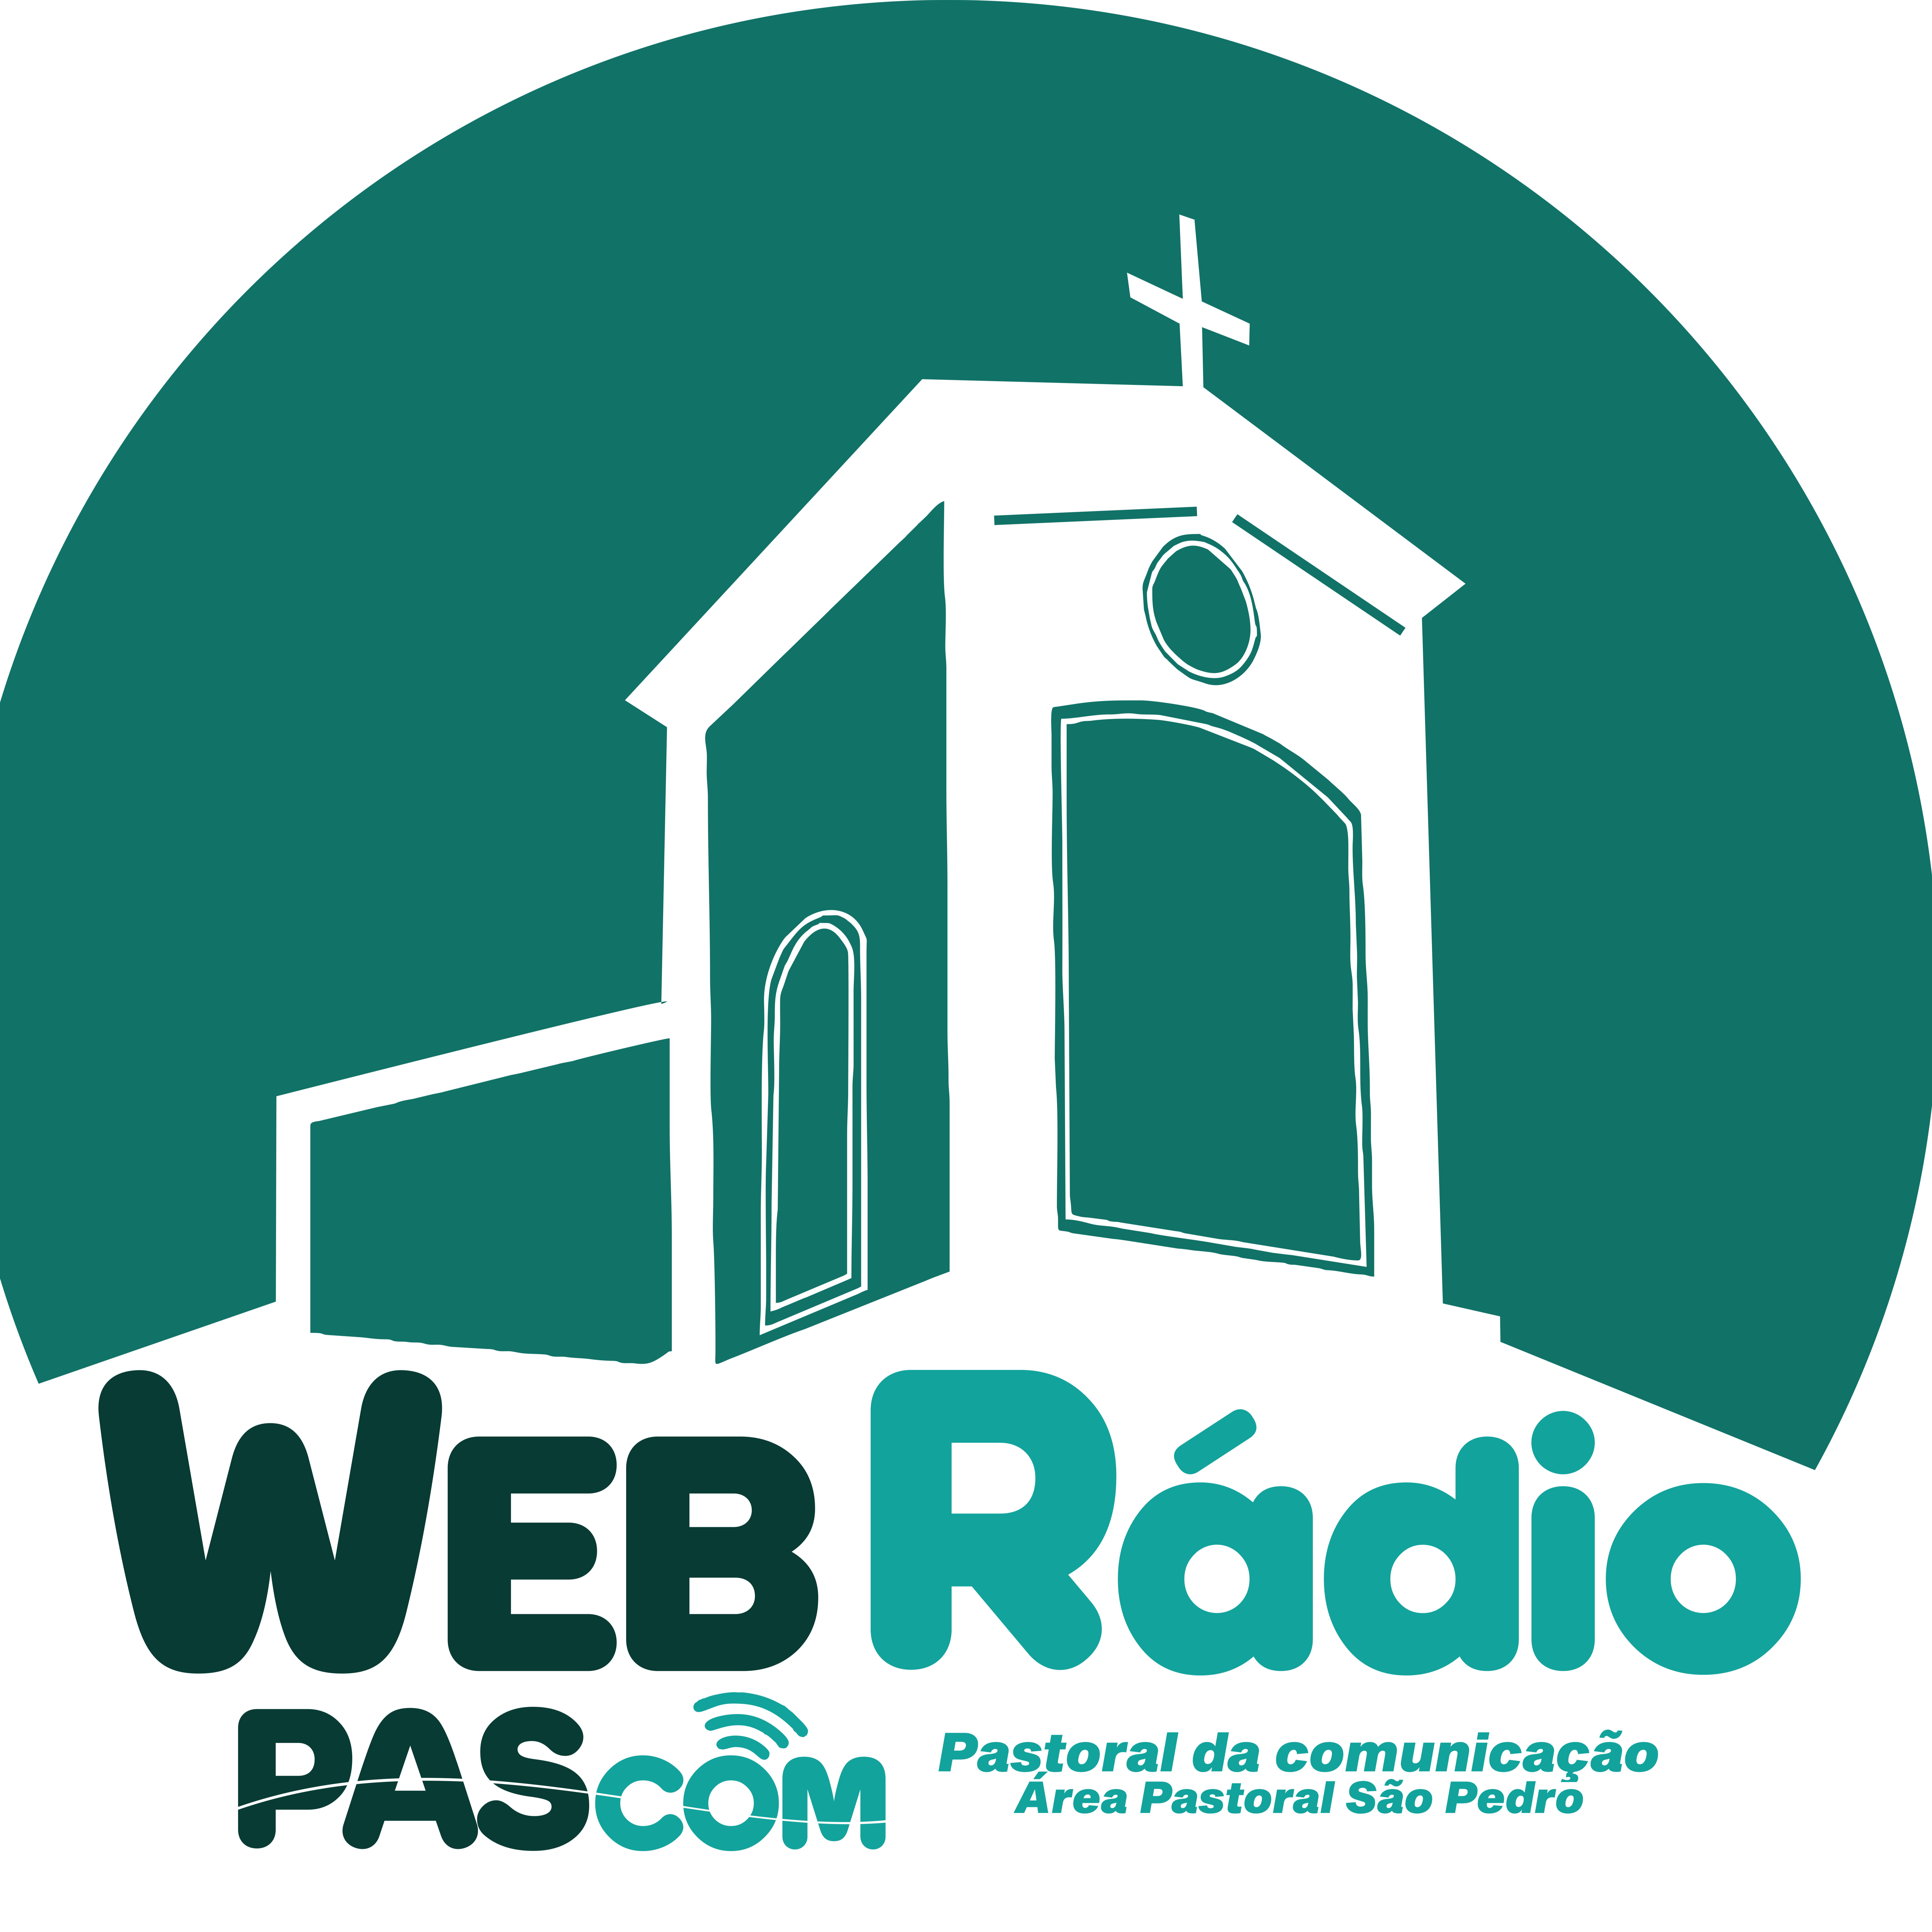 Radio Sao Pedro